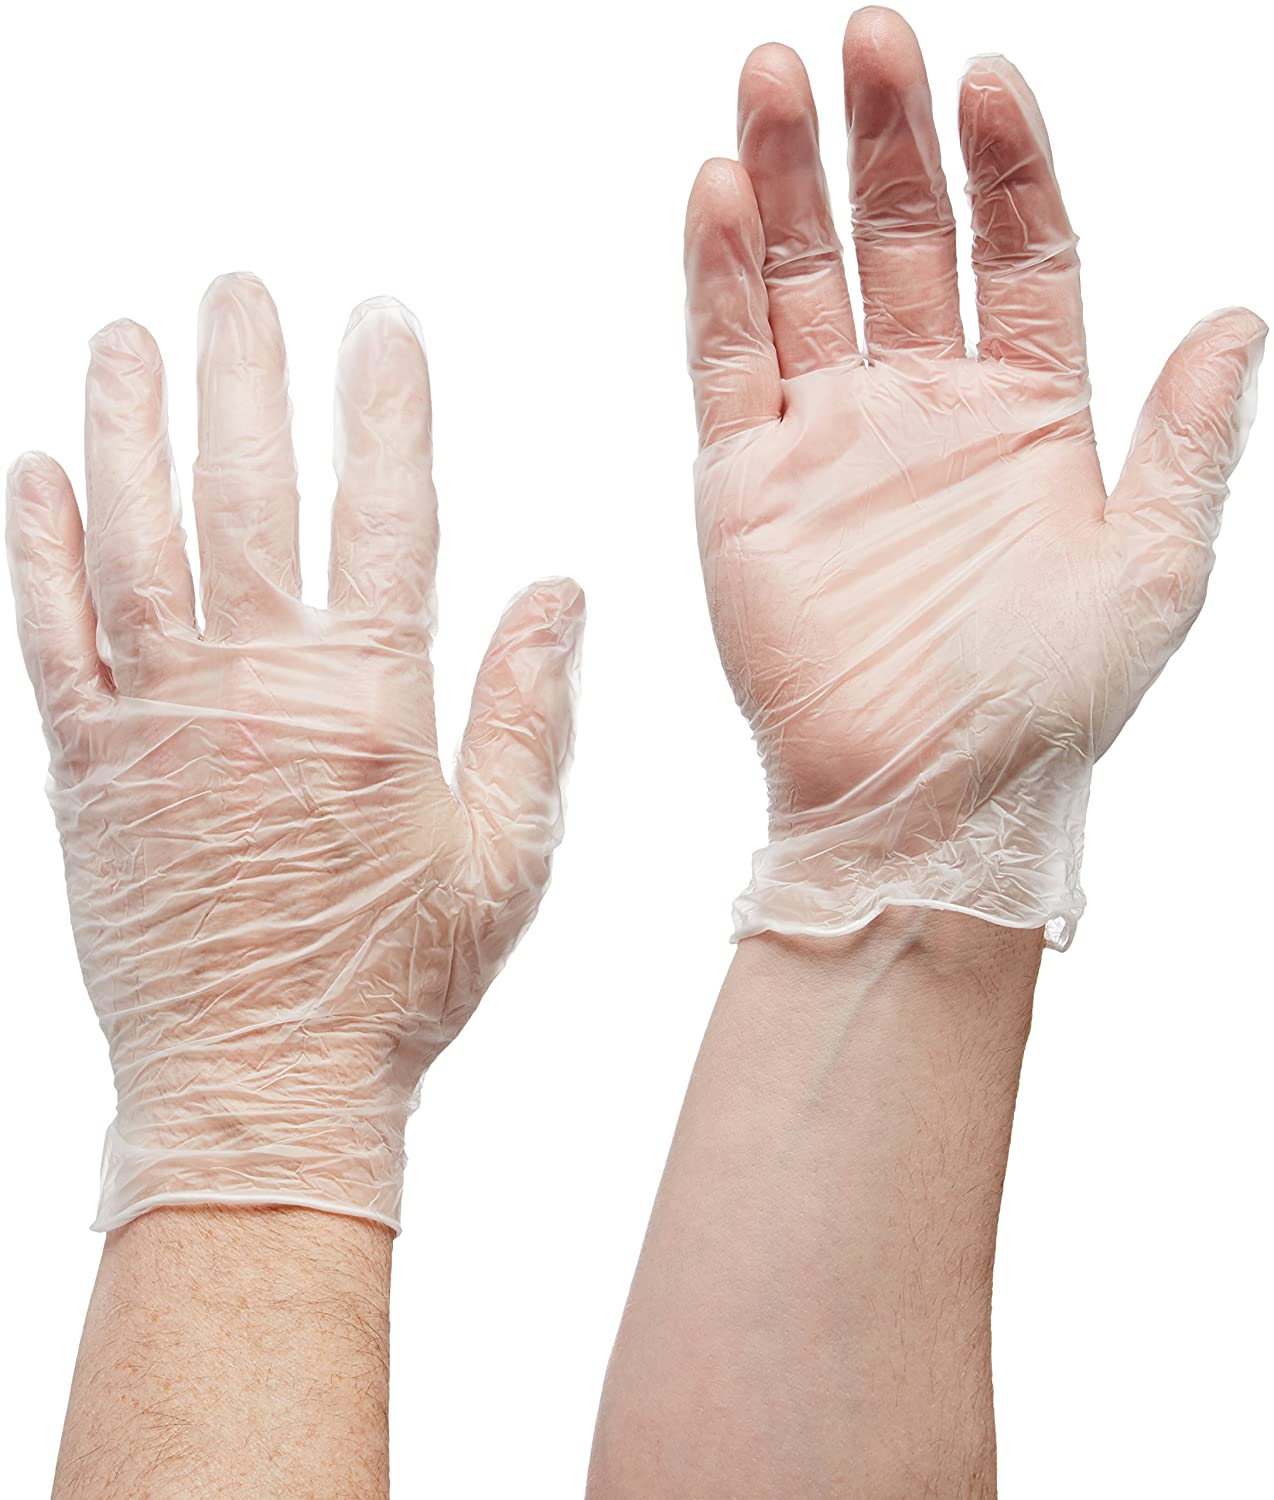 Clear vinyl powder free gloves - xl - 1 x 100